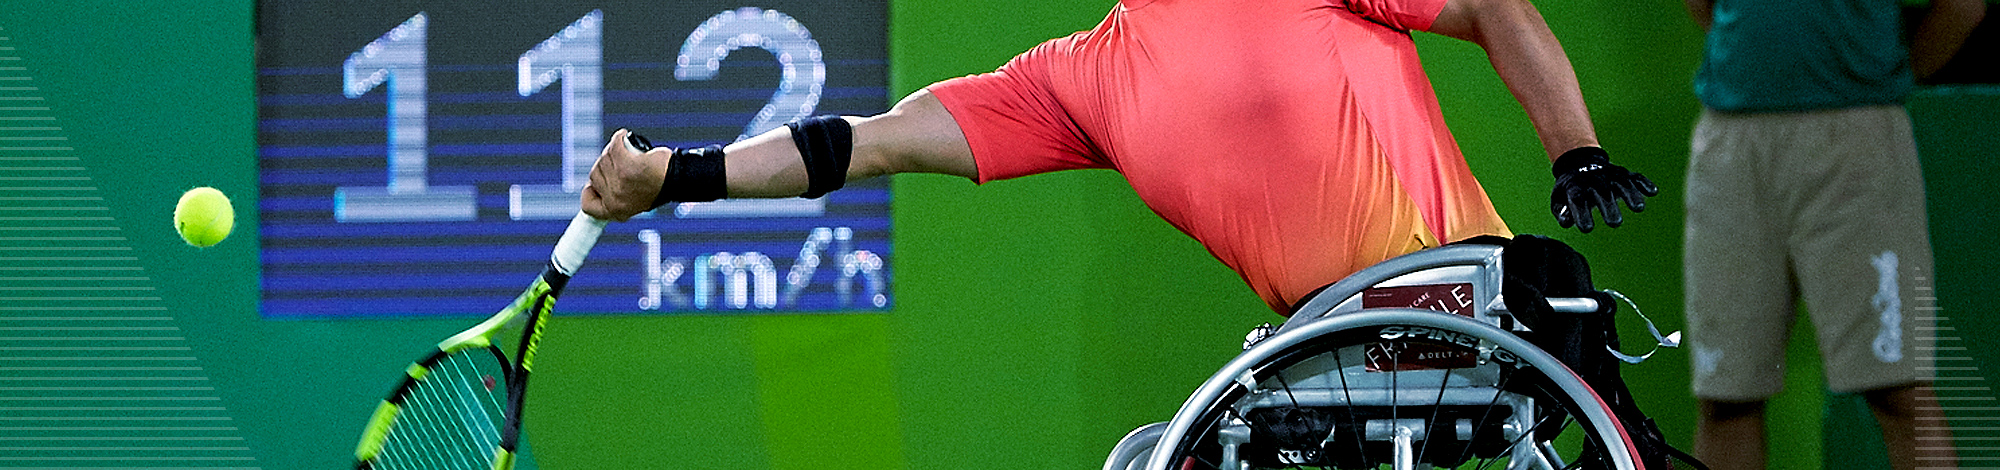 Korea Tennis Association for the Disabled